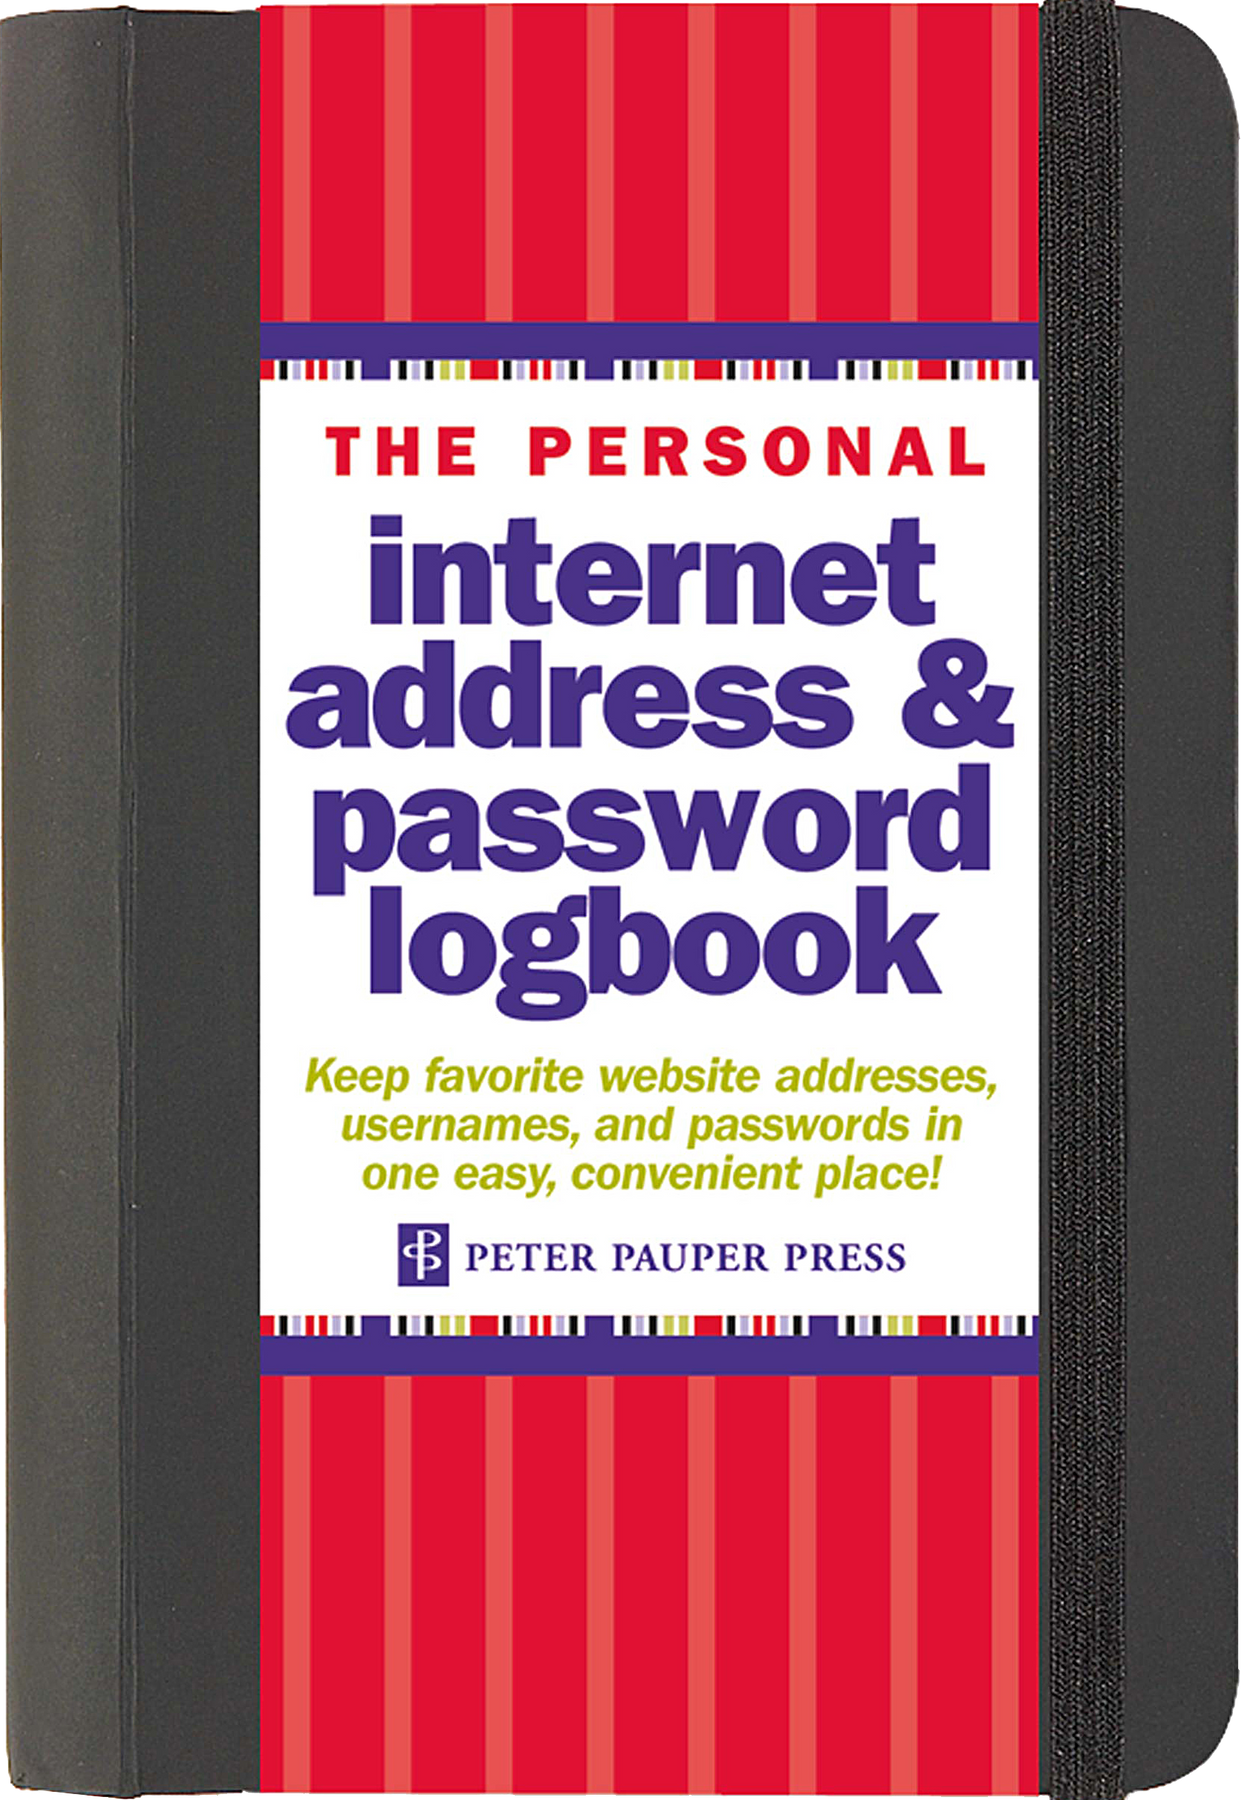 Internet Log Book - Black